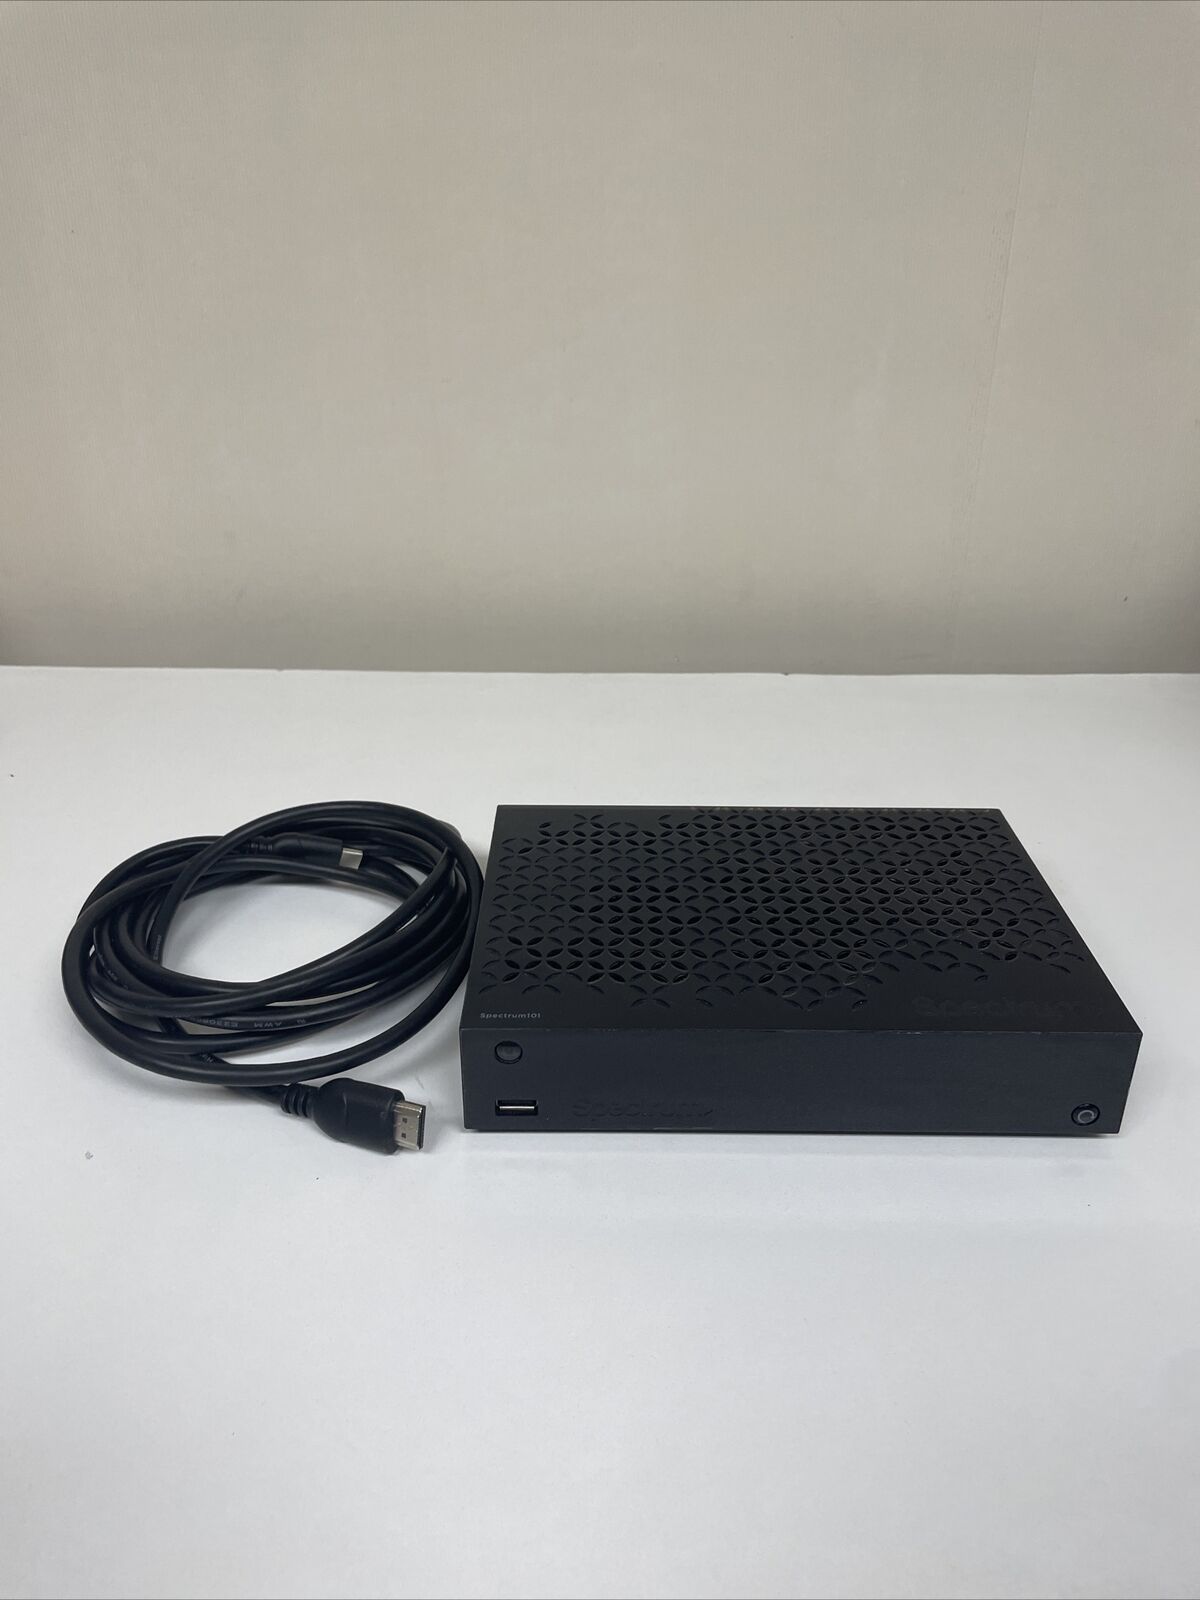 Spectrum 101-T HDMI Digital Receiver with HDMI cord, No Power cord Or Remote